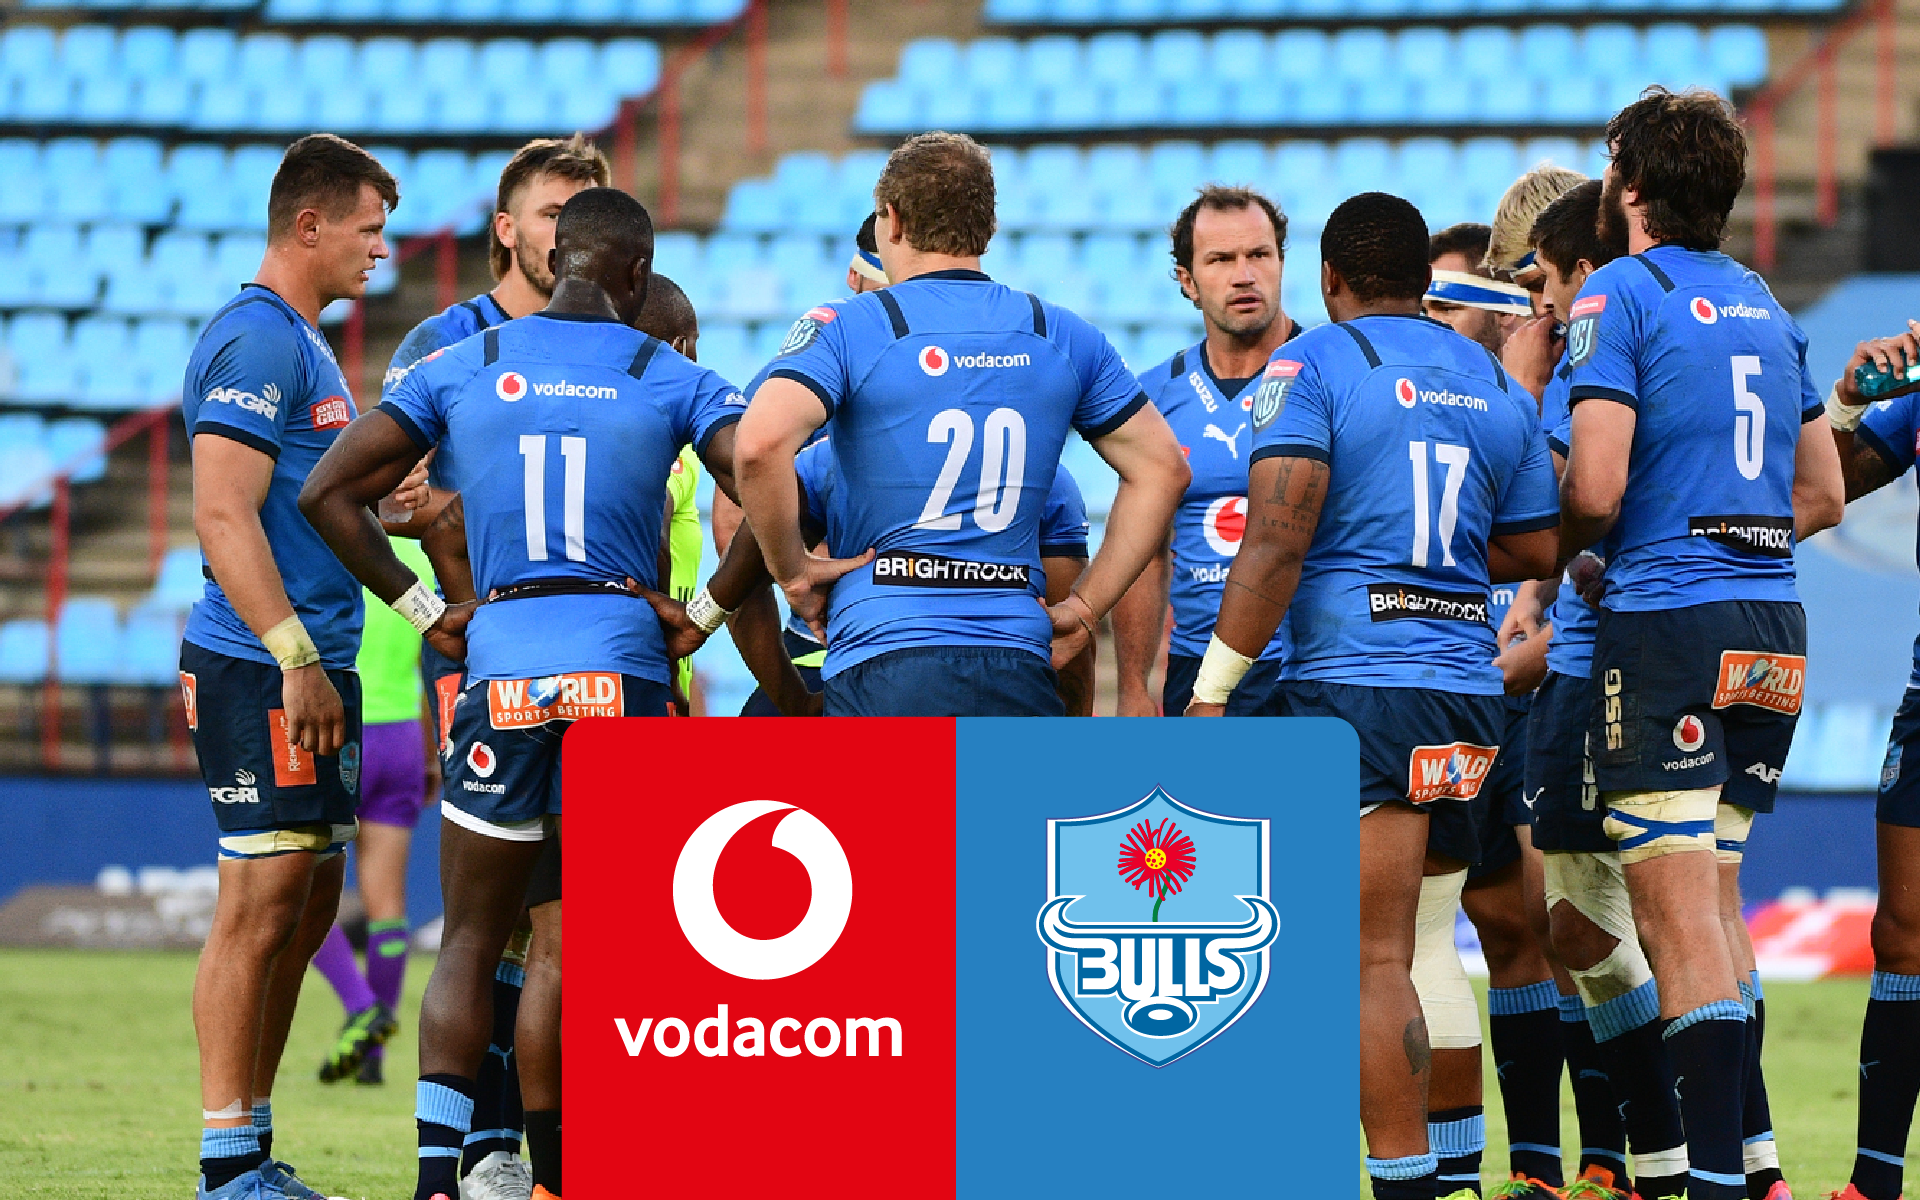 The Vodacom Bulls